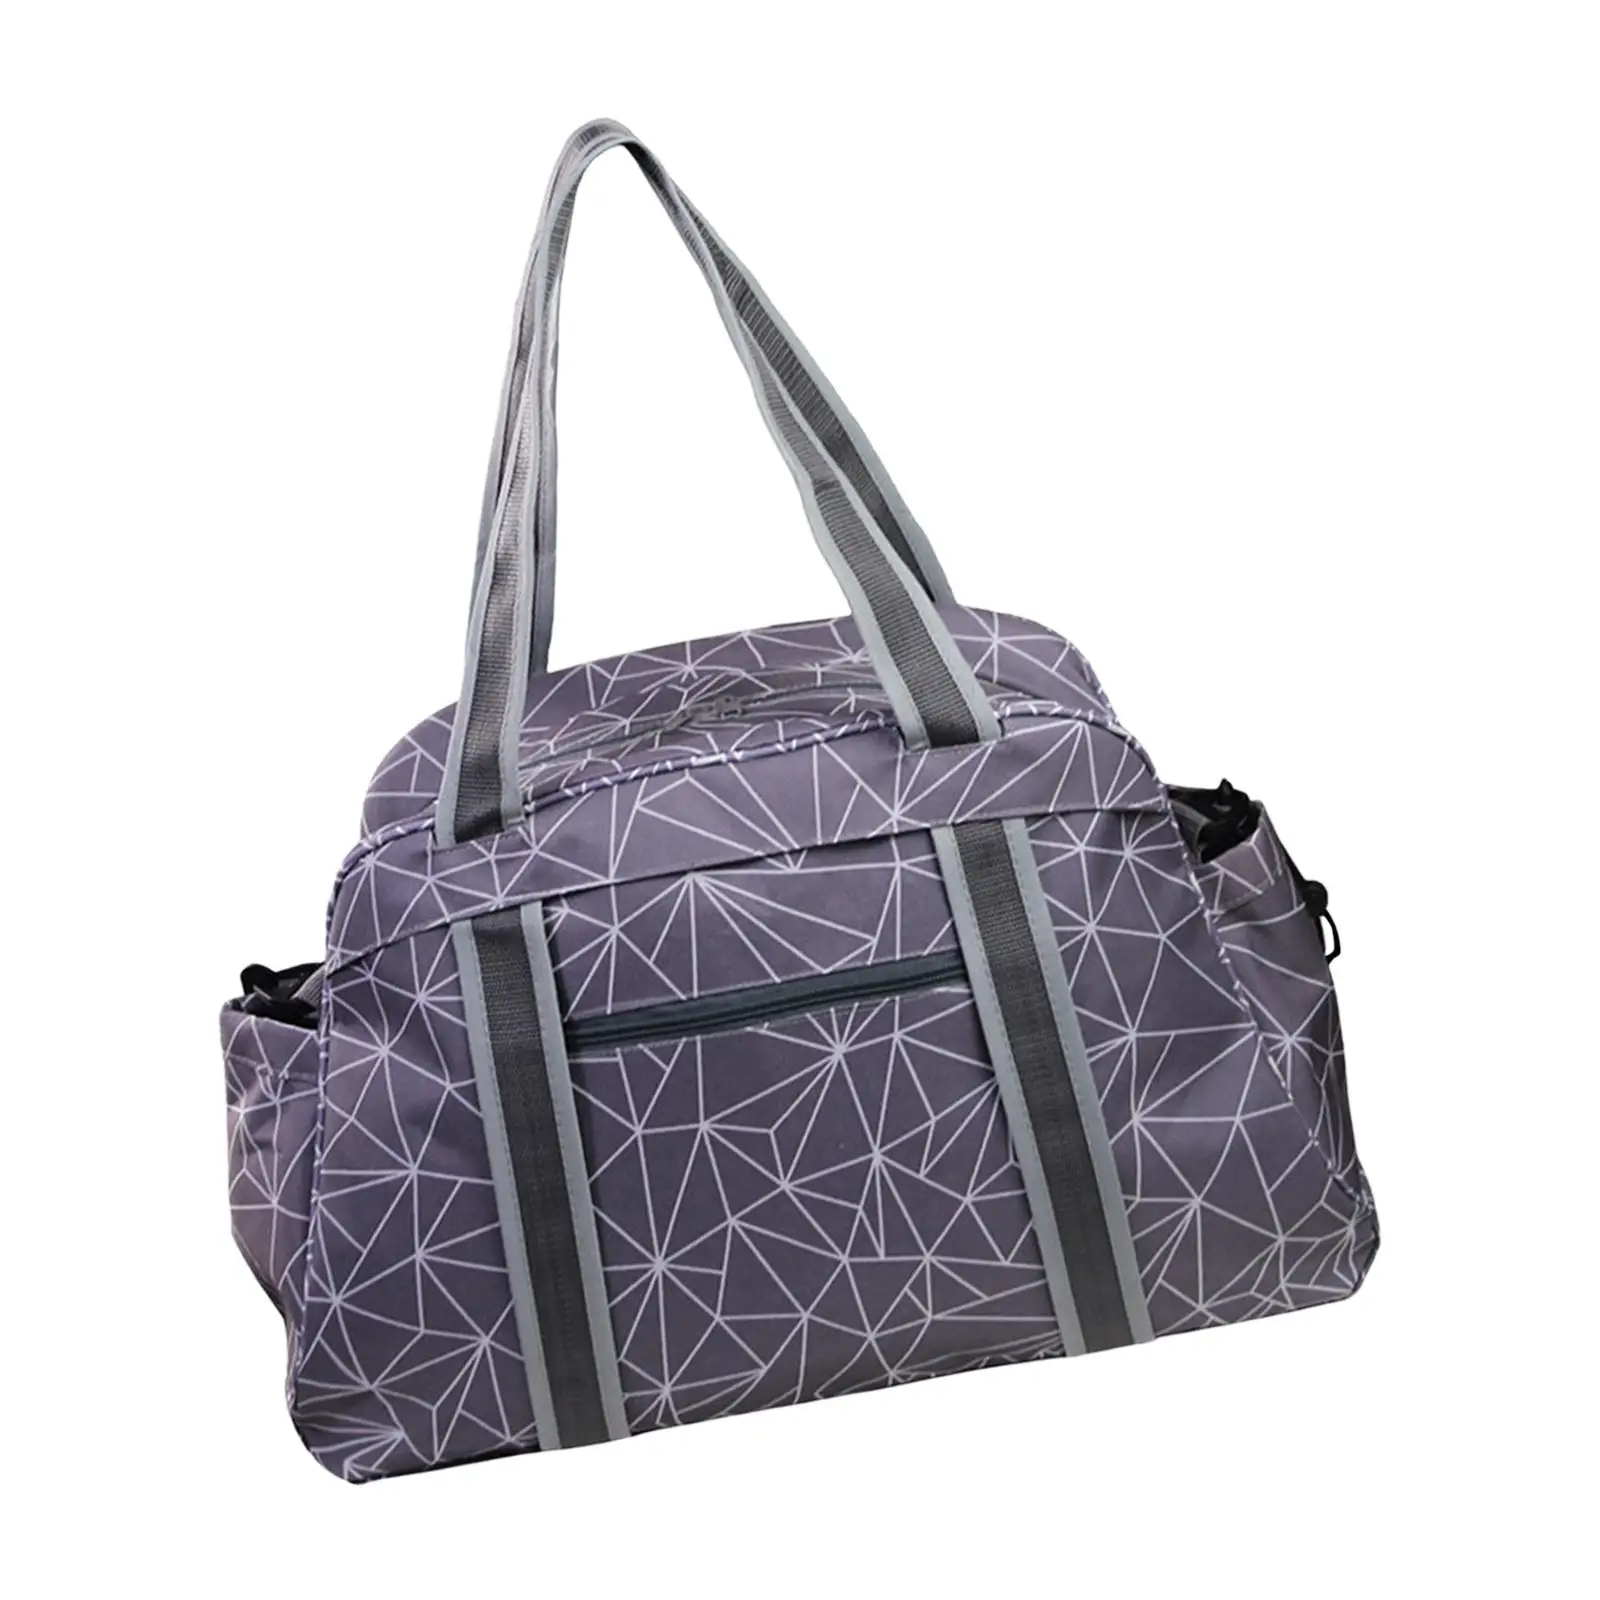 Large Capacity Travel Duffle Bag Handbag Sports Gym Bag for Yoga Swimming Clothing